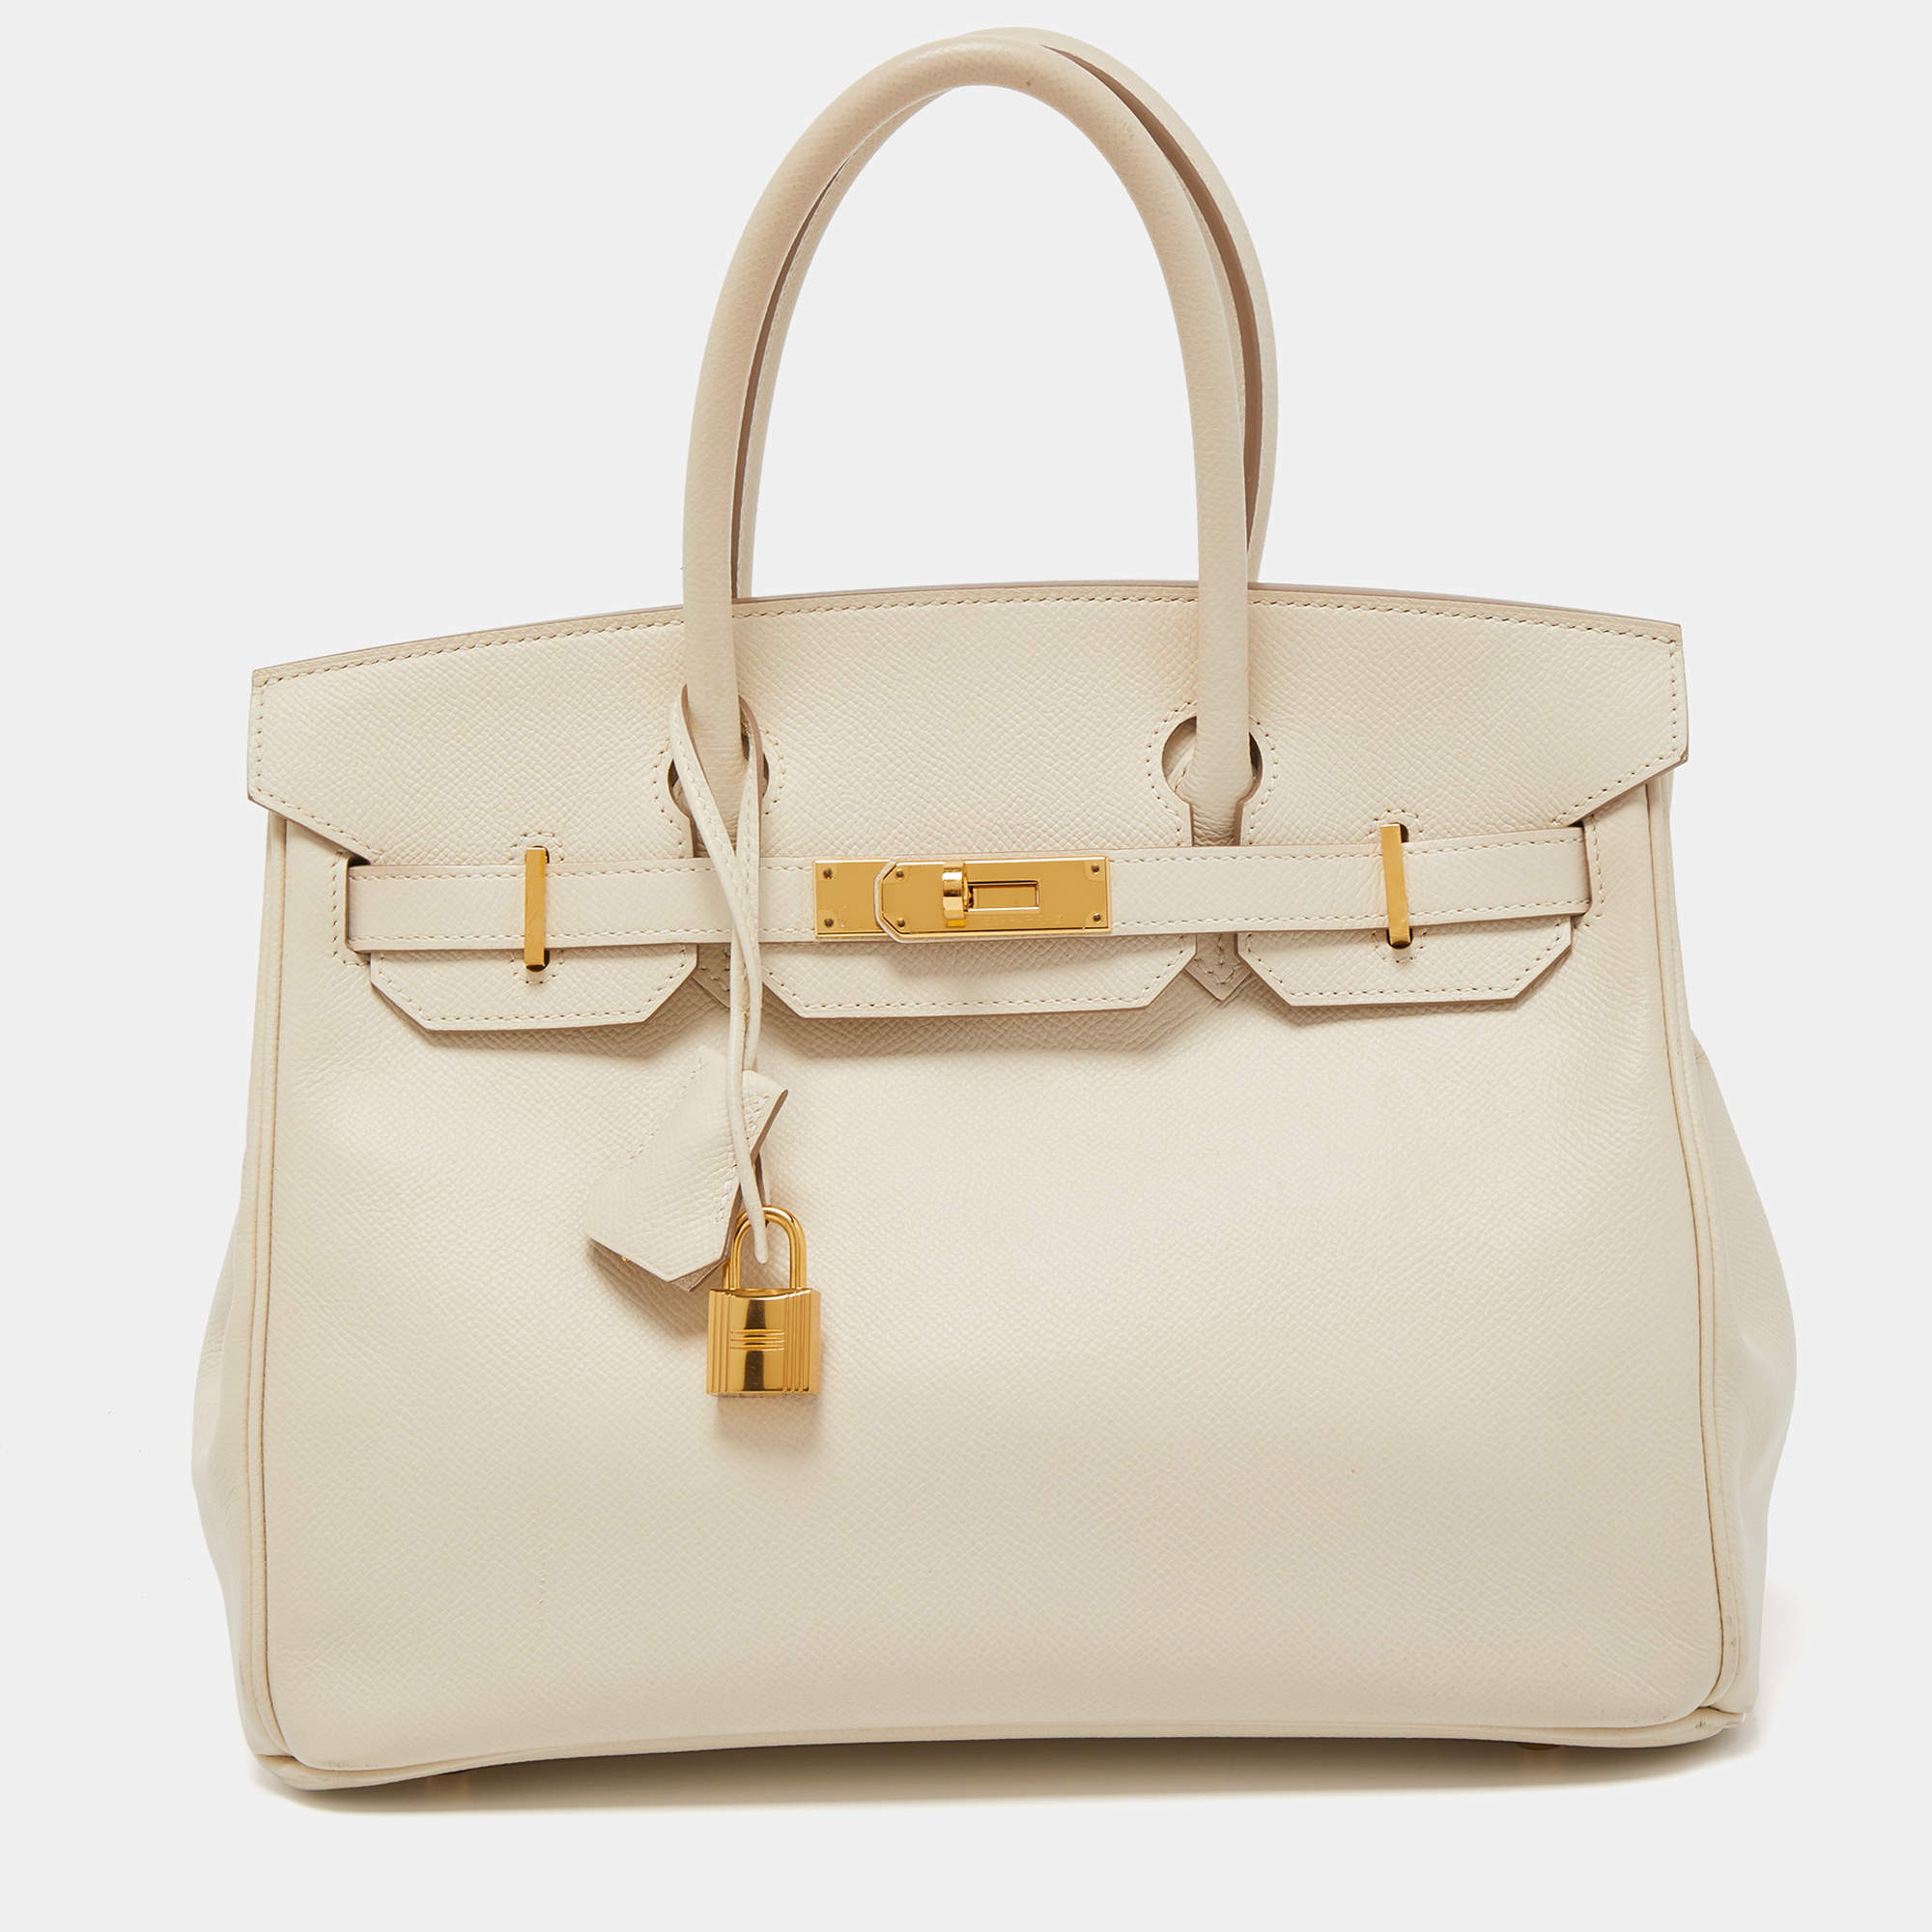 Hermes Birkin Bag 30cm Craie Togo Leather Women's Handbag Sale